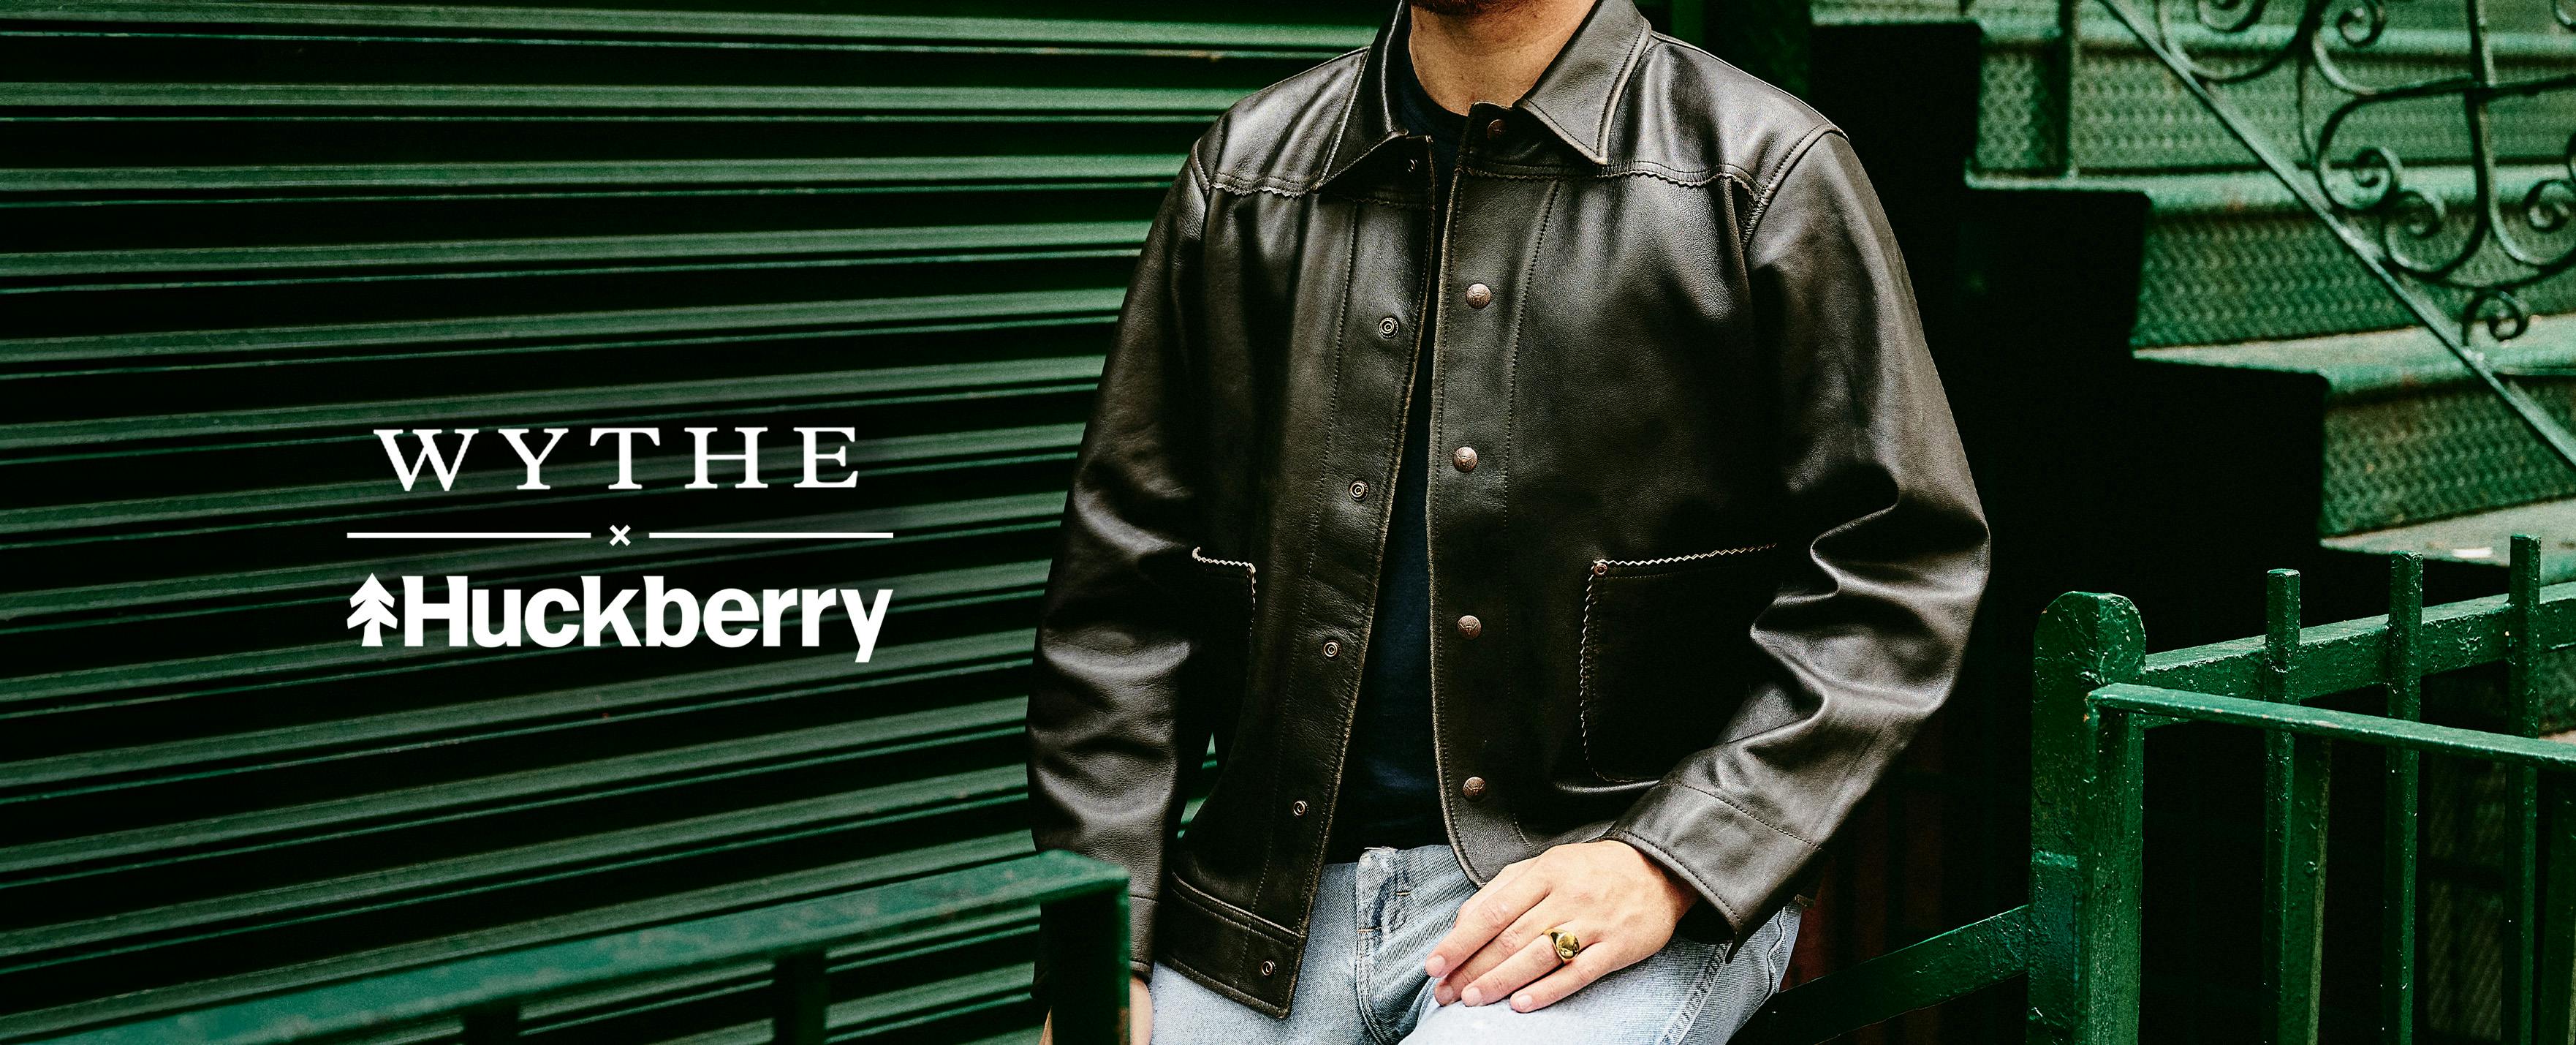 Wythe x Huckberry Man wearing leather jacket